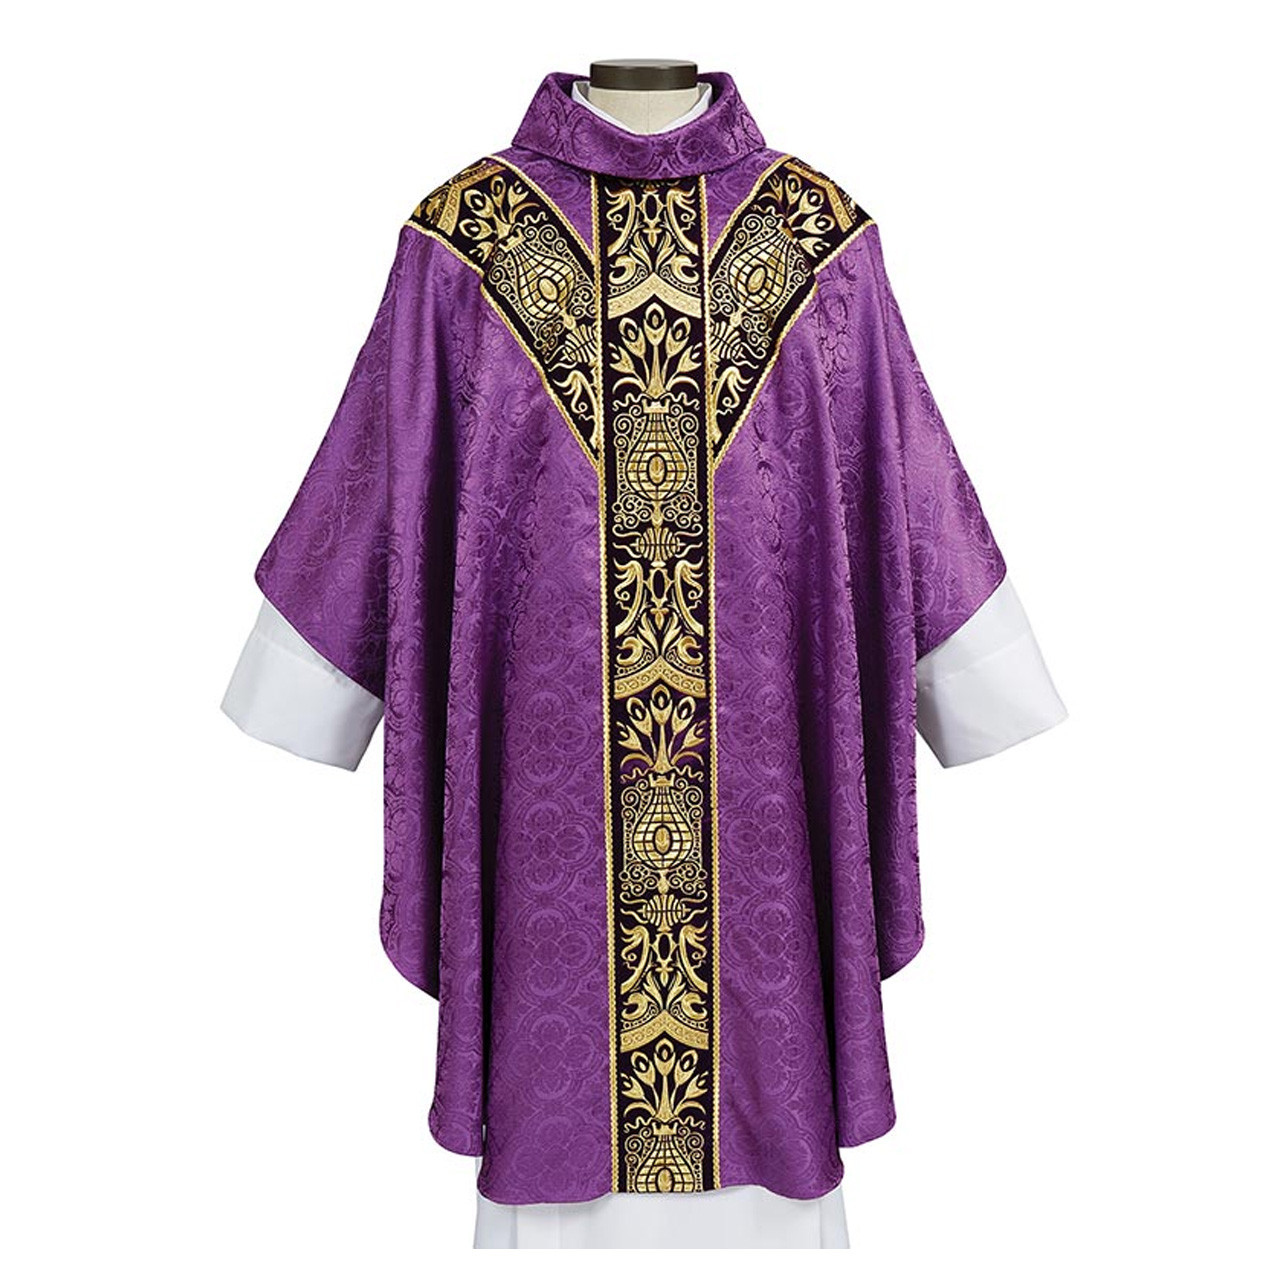 L5019 All Saints Collection Chasuble - Purple